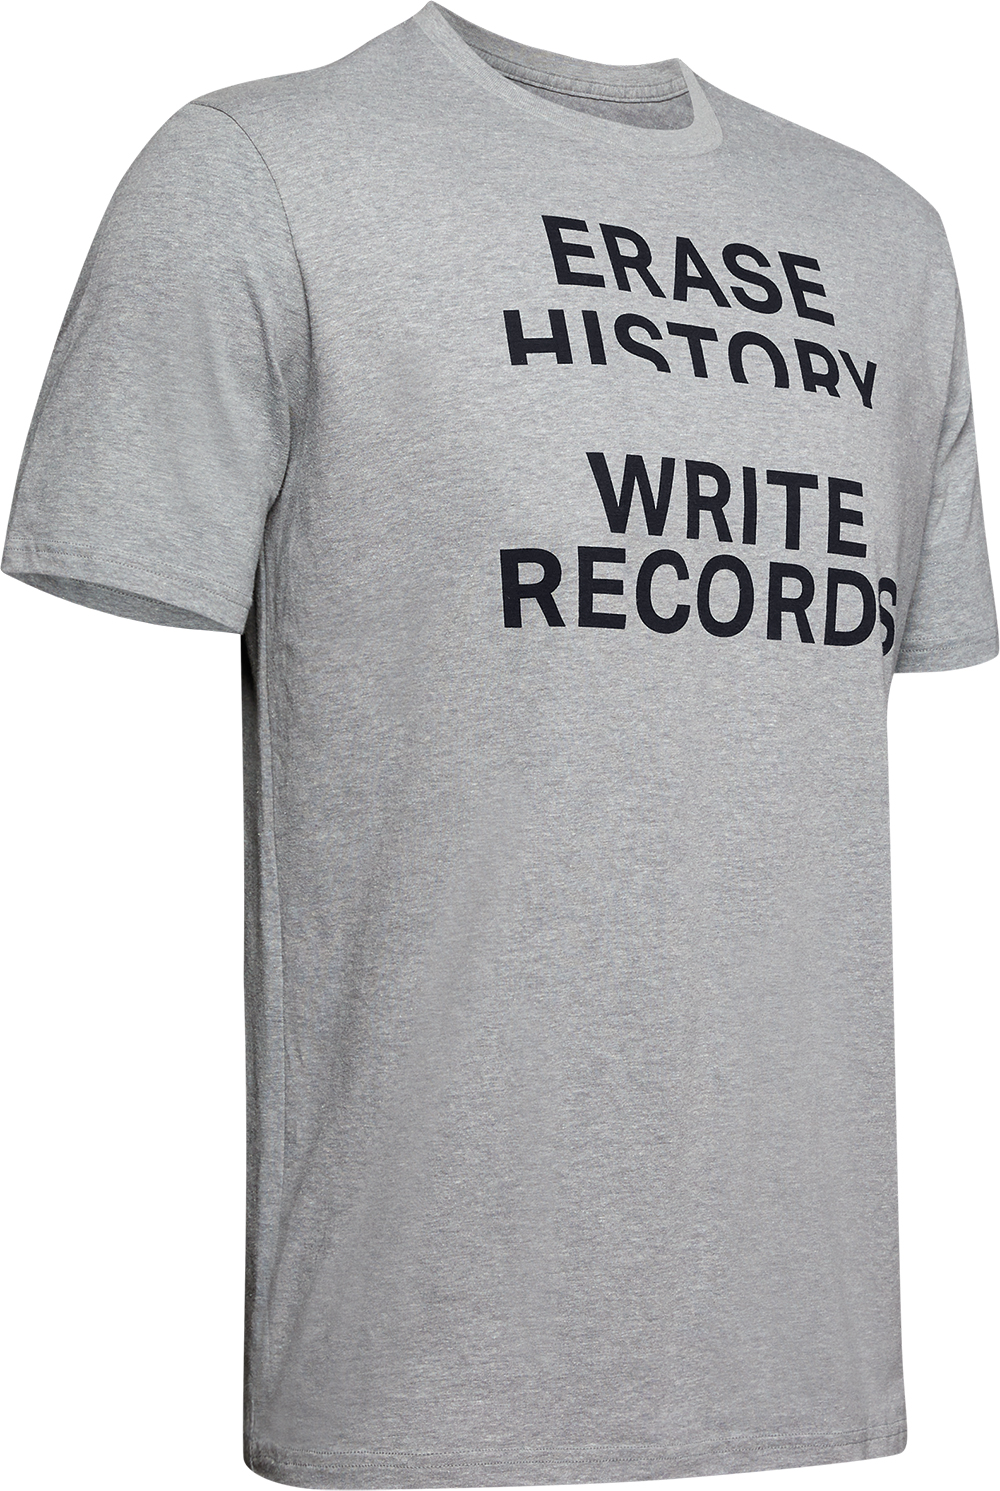 Under Armour MFO Shirt Write Records